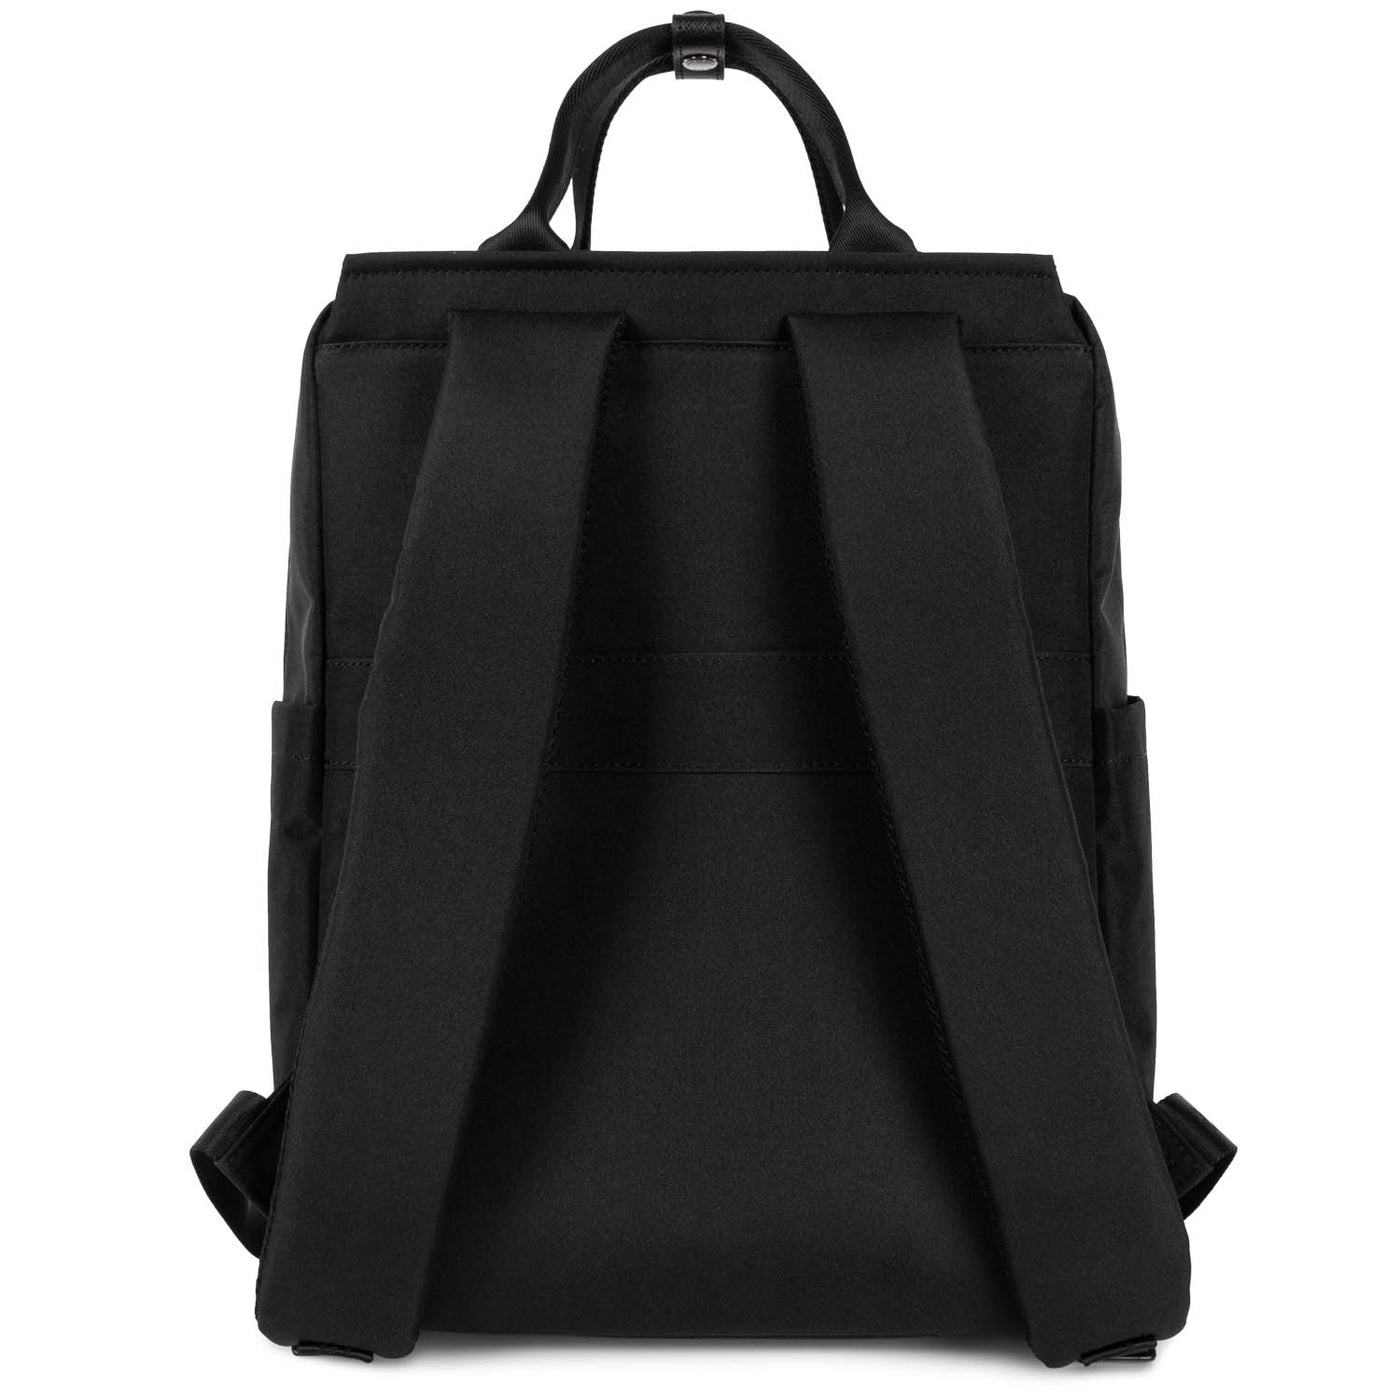 backpack - smart kba #couleur_noir